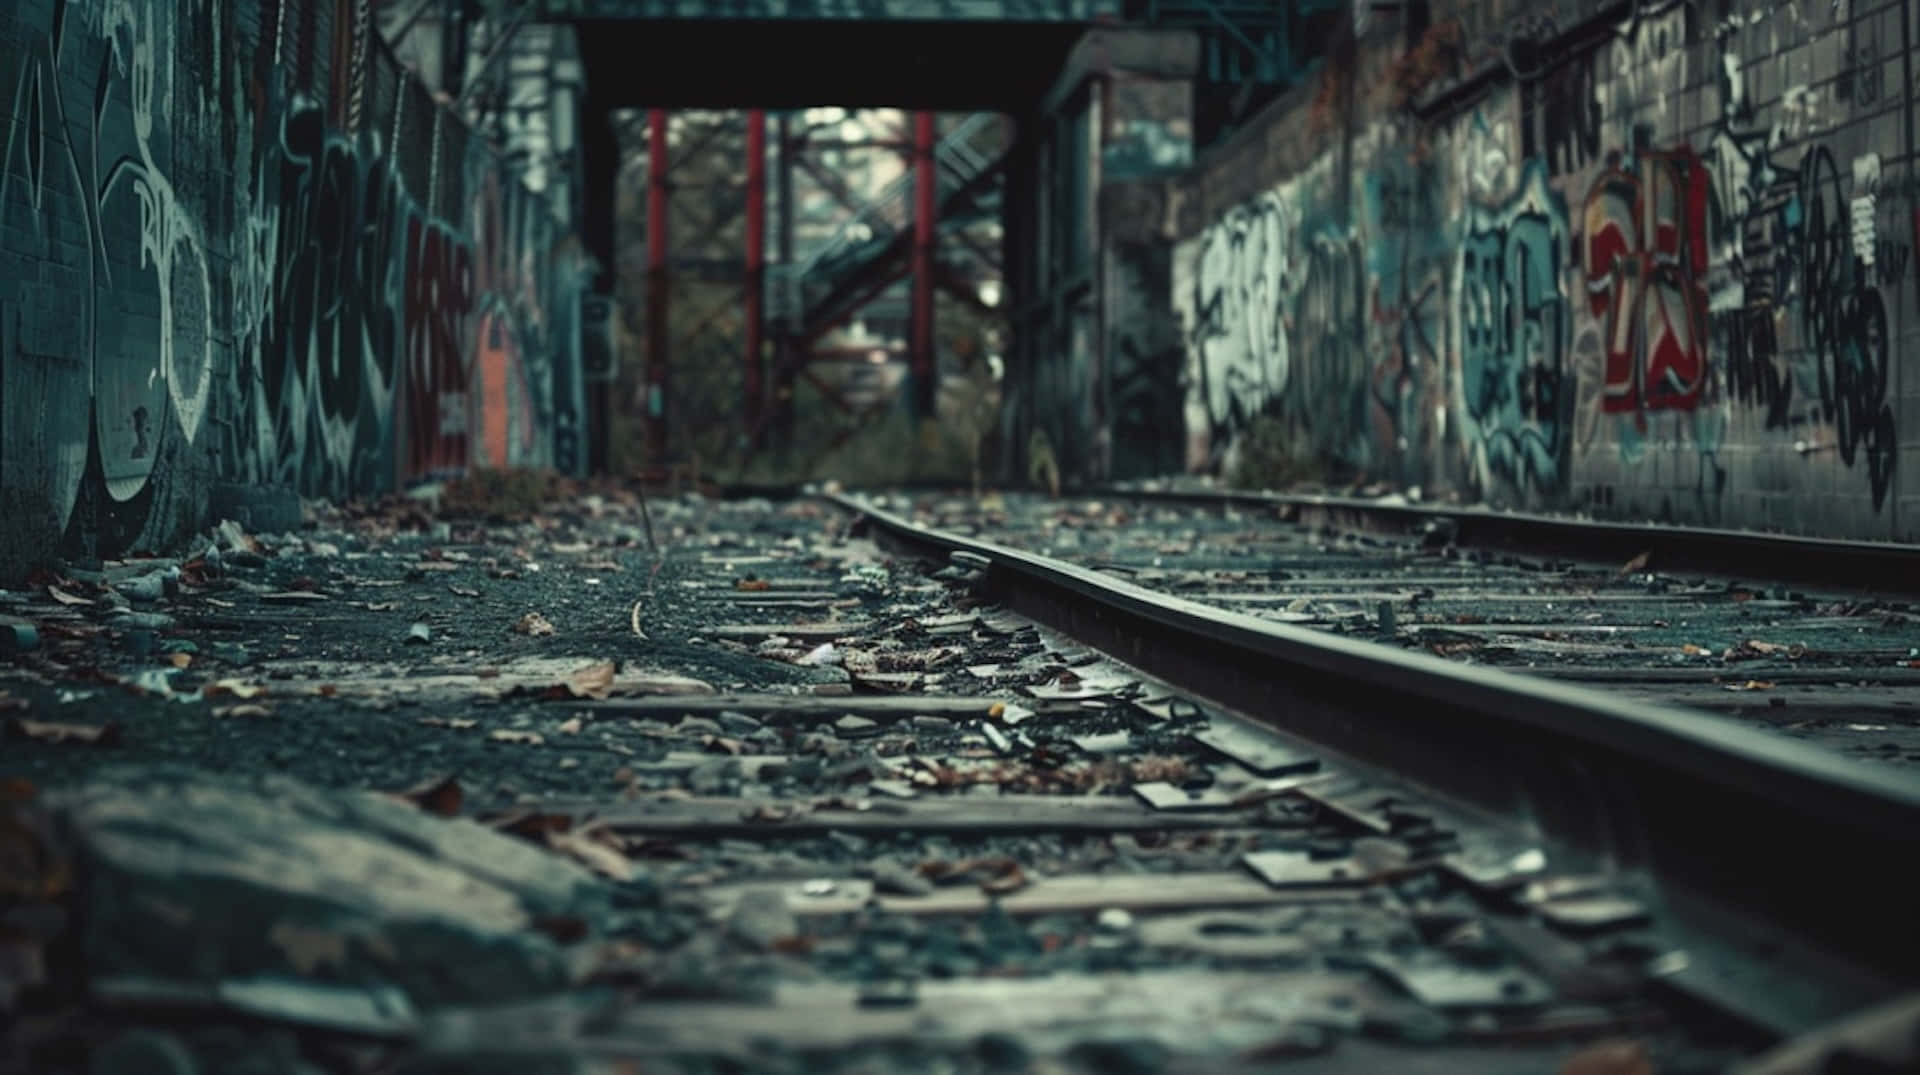 Urban Decay Railroad Track Graffiti Wallpaper